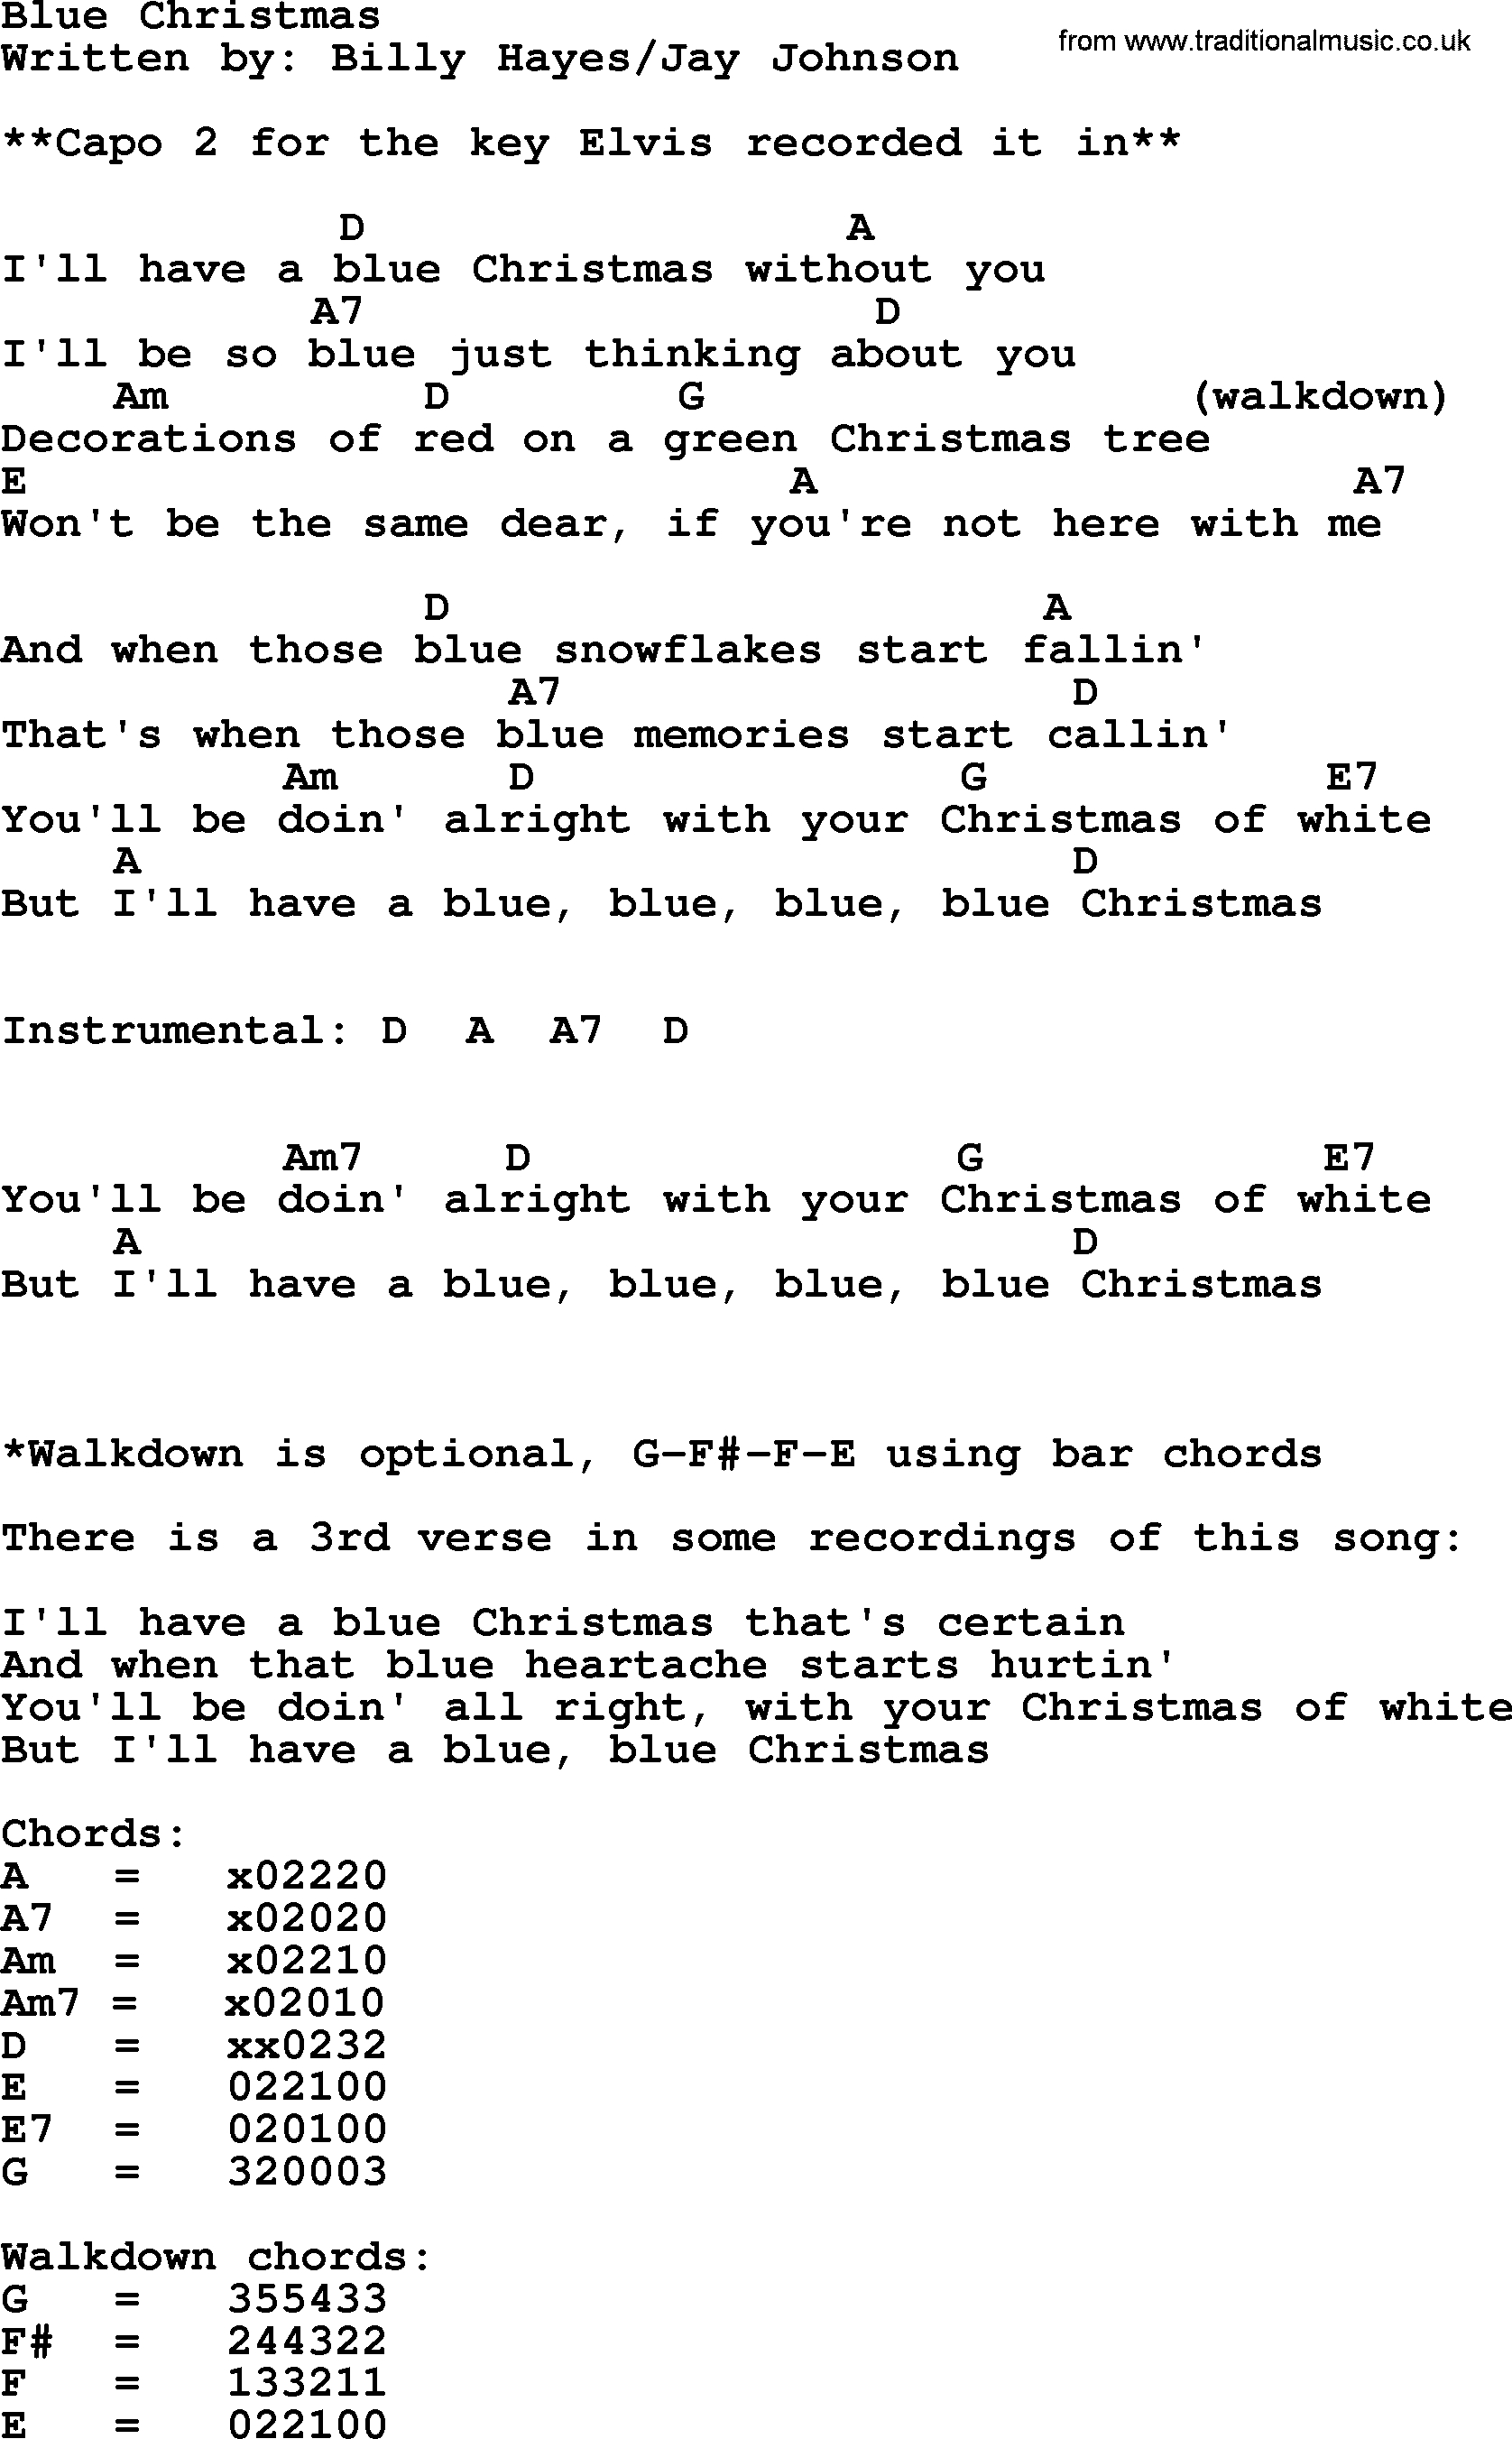 Blue Christmas Chords Blue Christmas Elvis Presley Lyrics And Chords